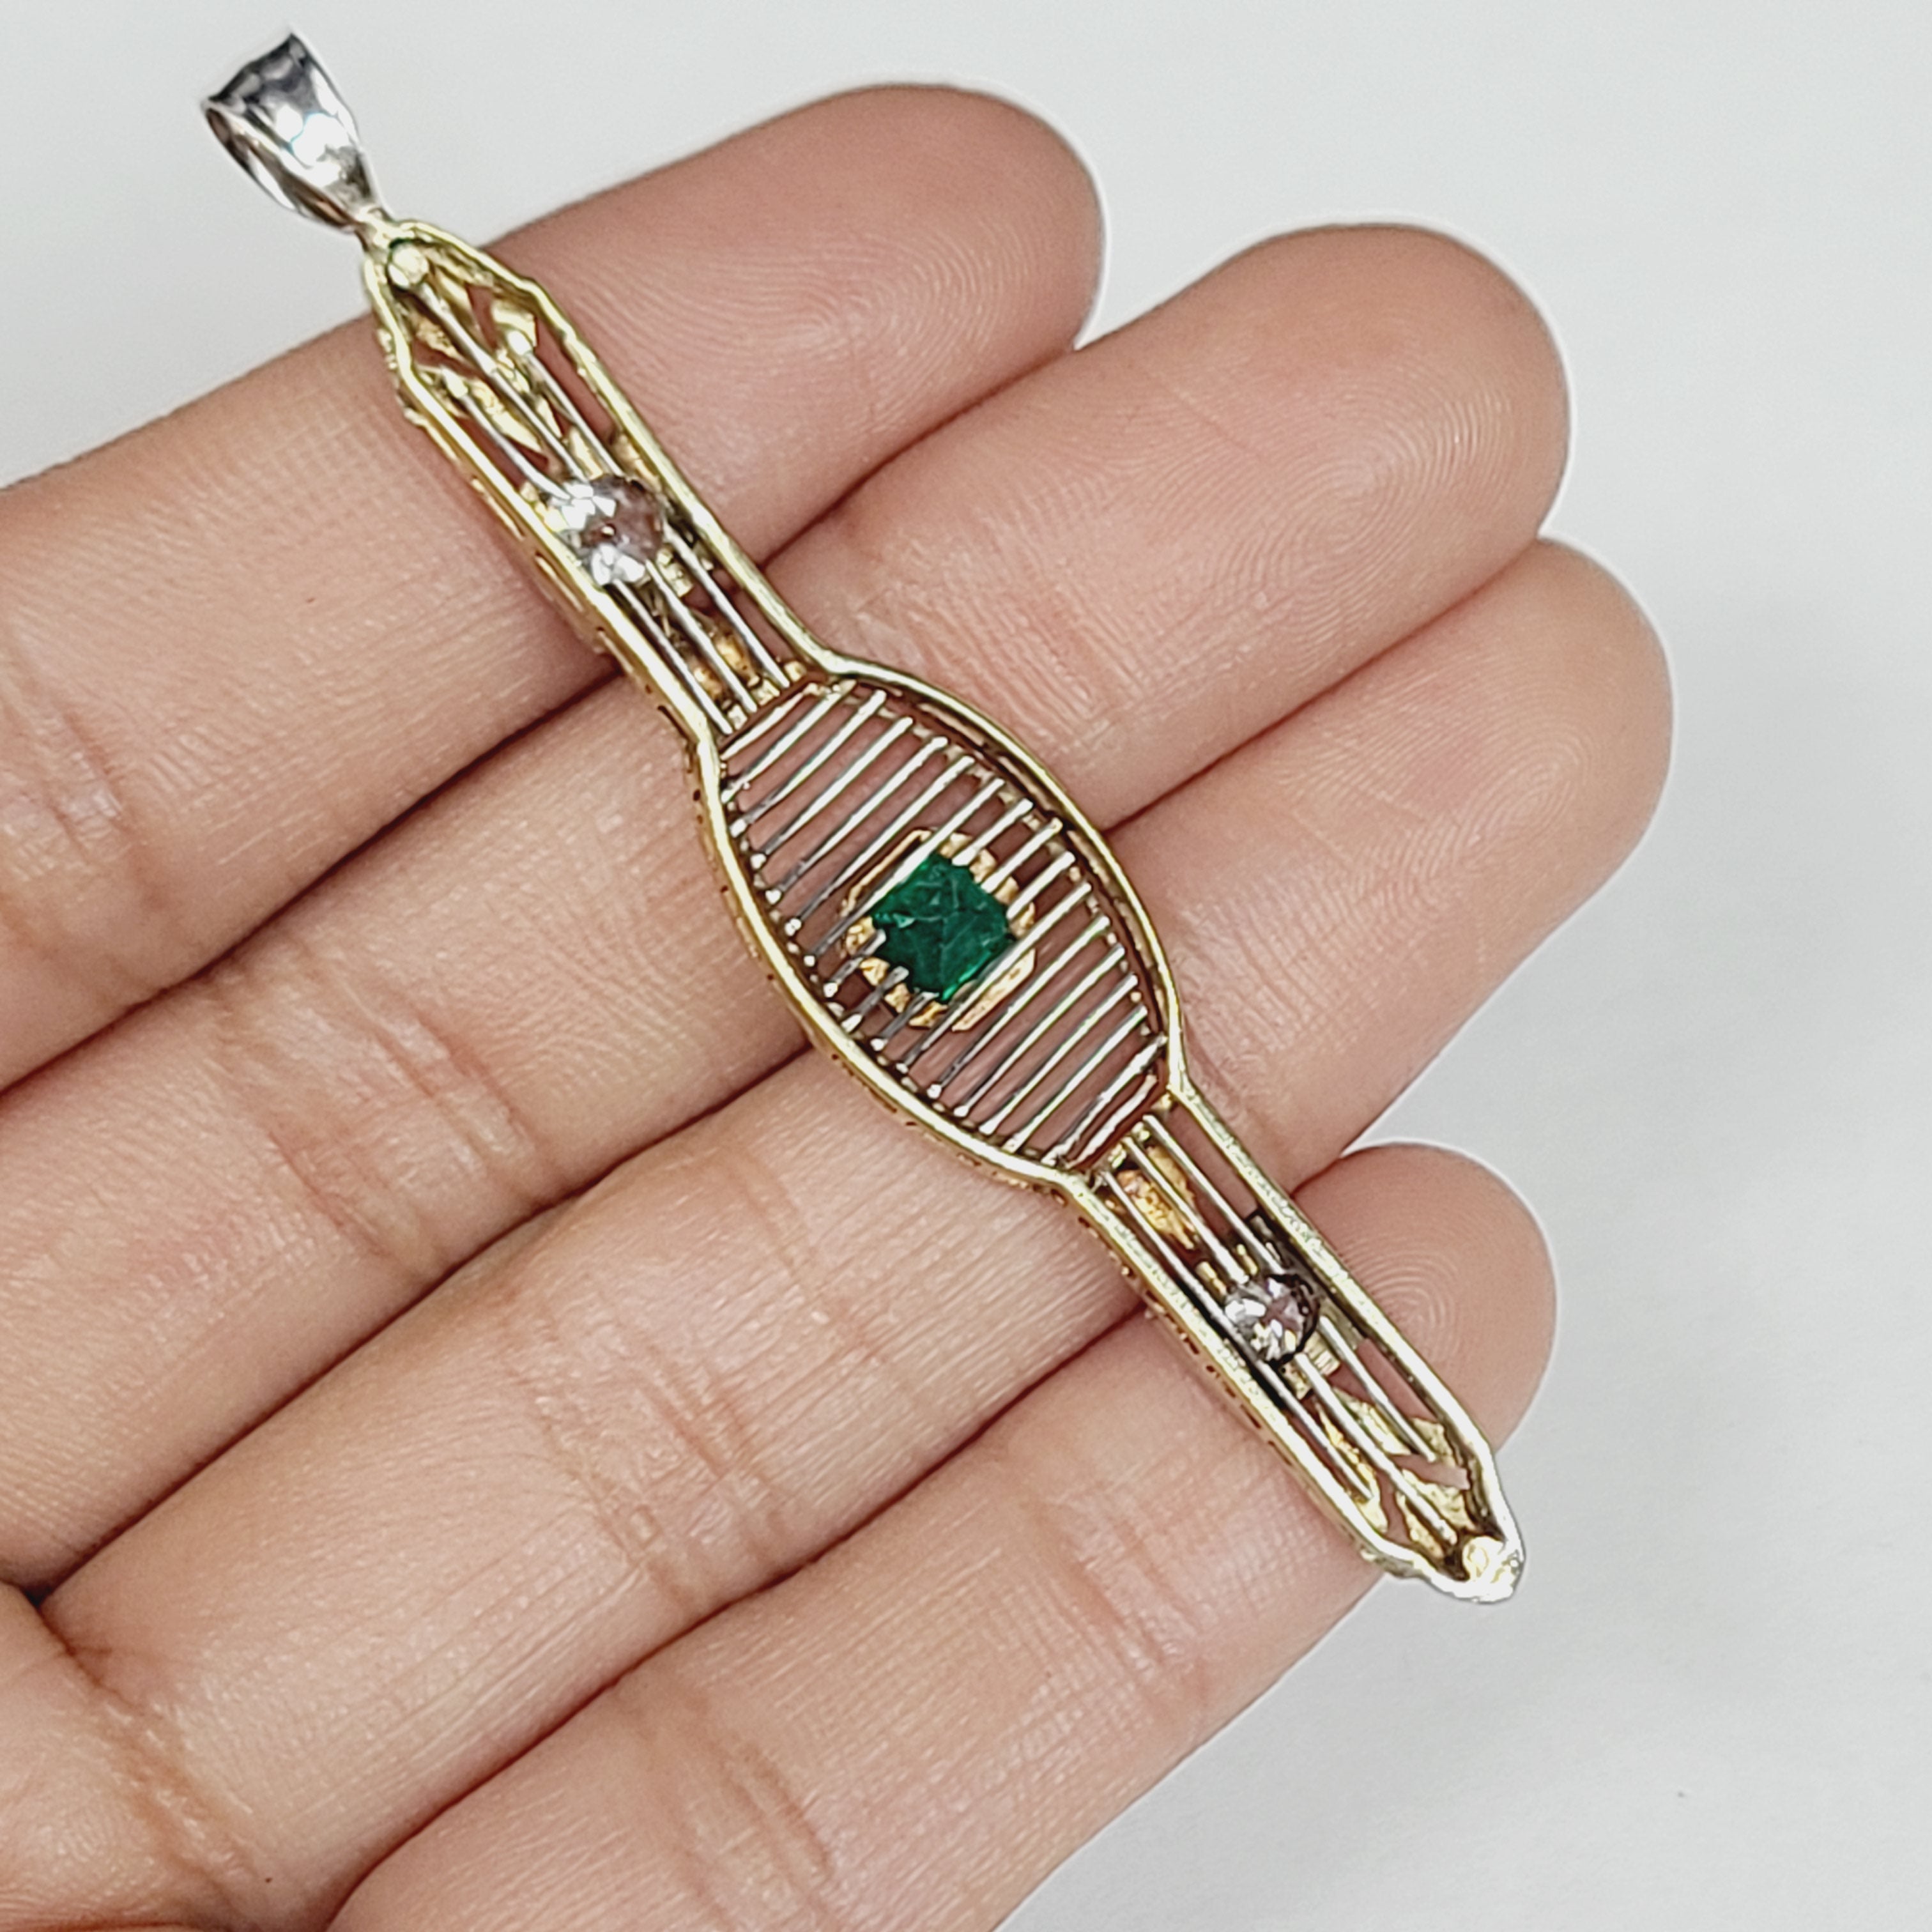 Art Deco Emerald and Diamond 14K White Gold Bar Pin Pendant